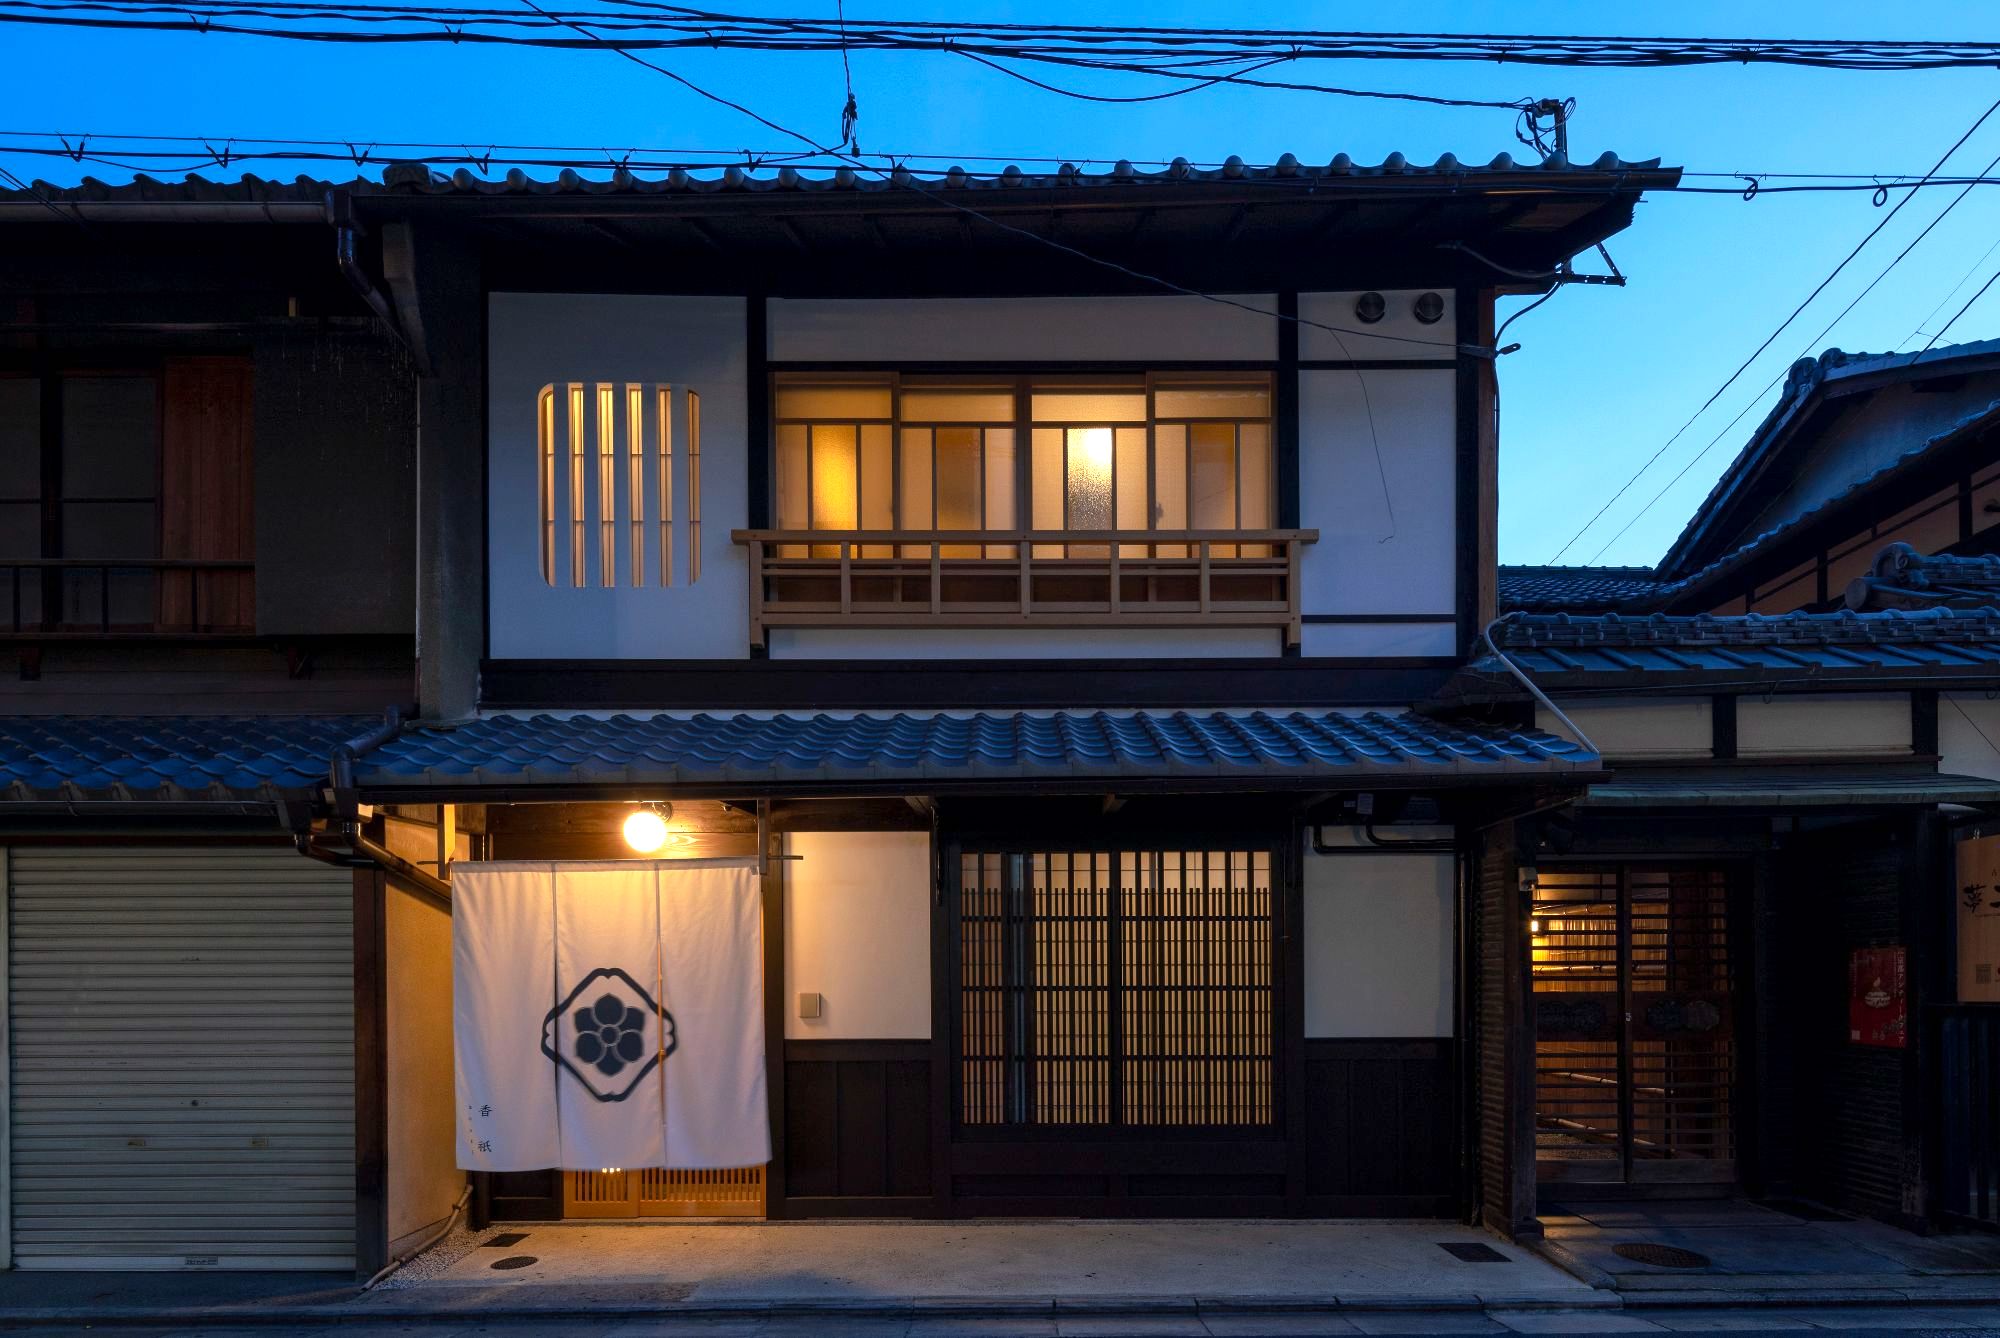 Virtual Tour: Walk Around the Gion Neighborhood & Tour a Traditional Japanese House (Kyoto, Japan)